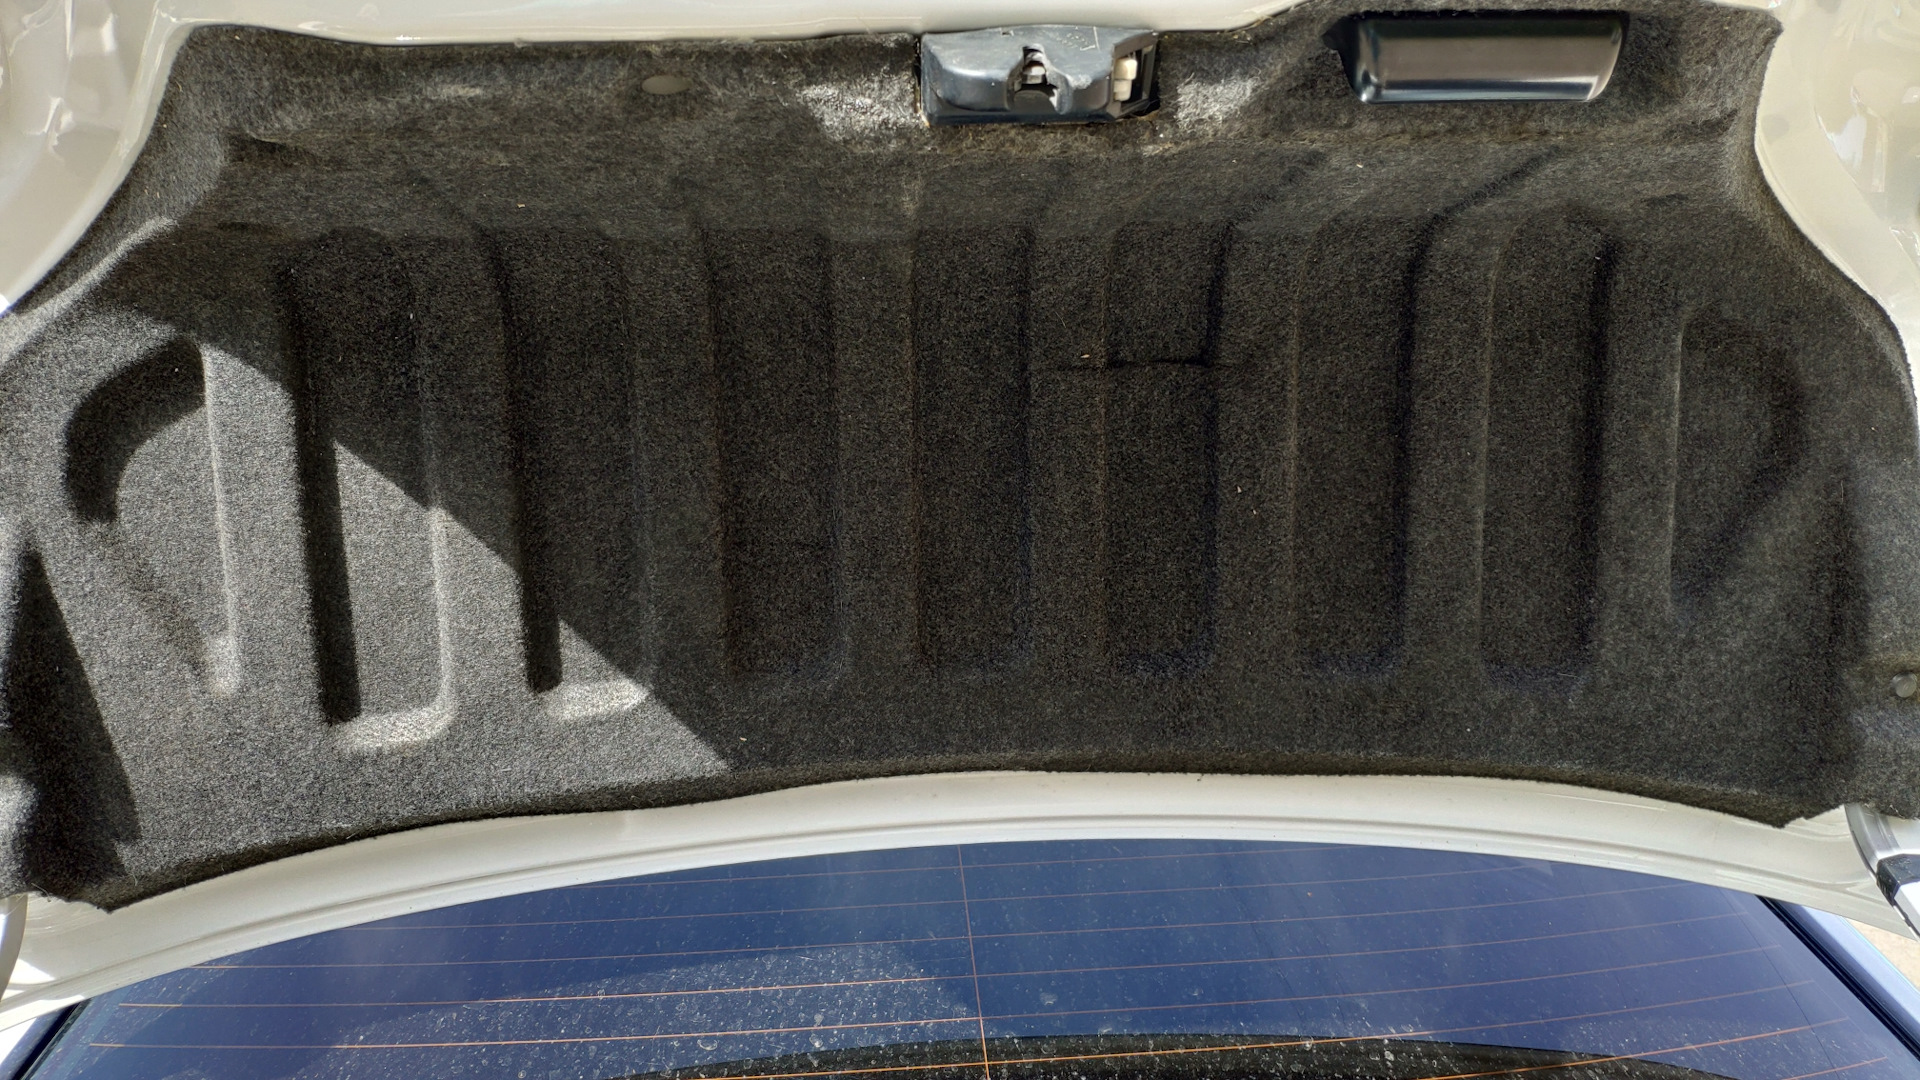 Обшивка крышки багажника Митсубиси Эклипс 3. Форум обшивка